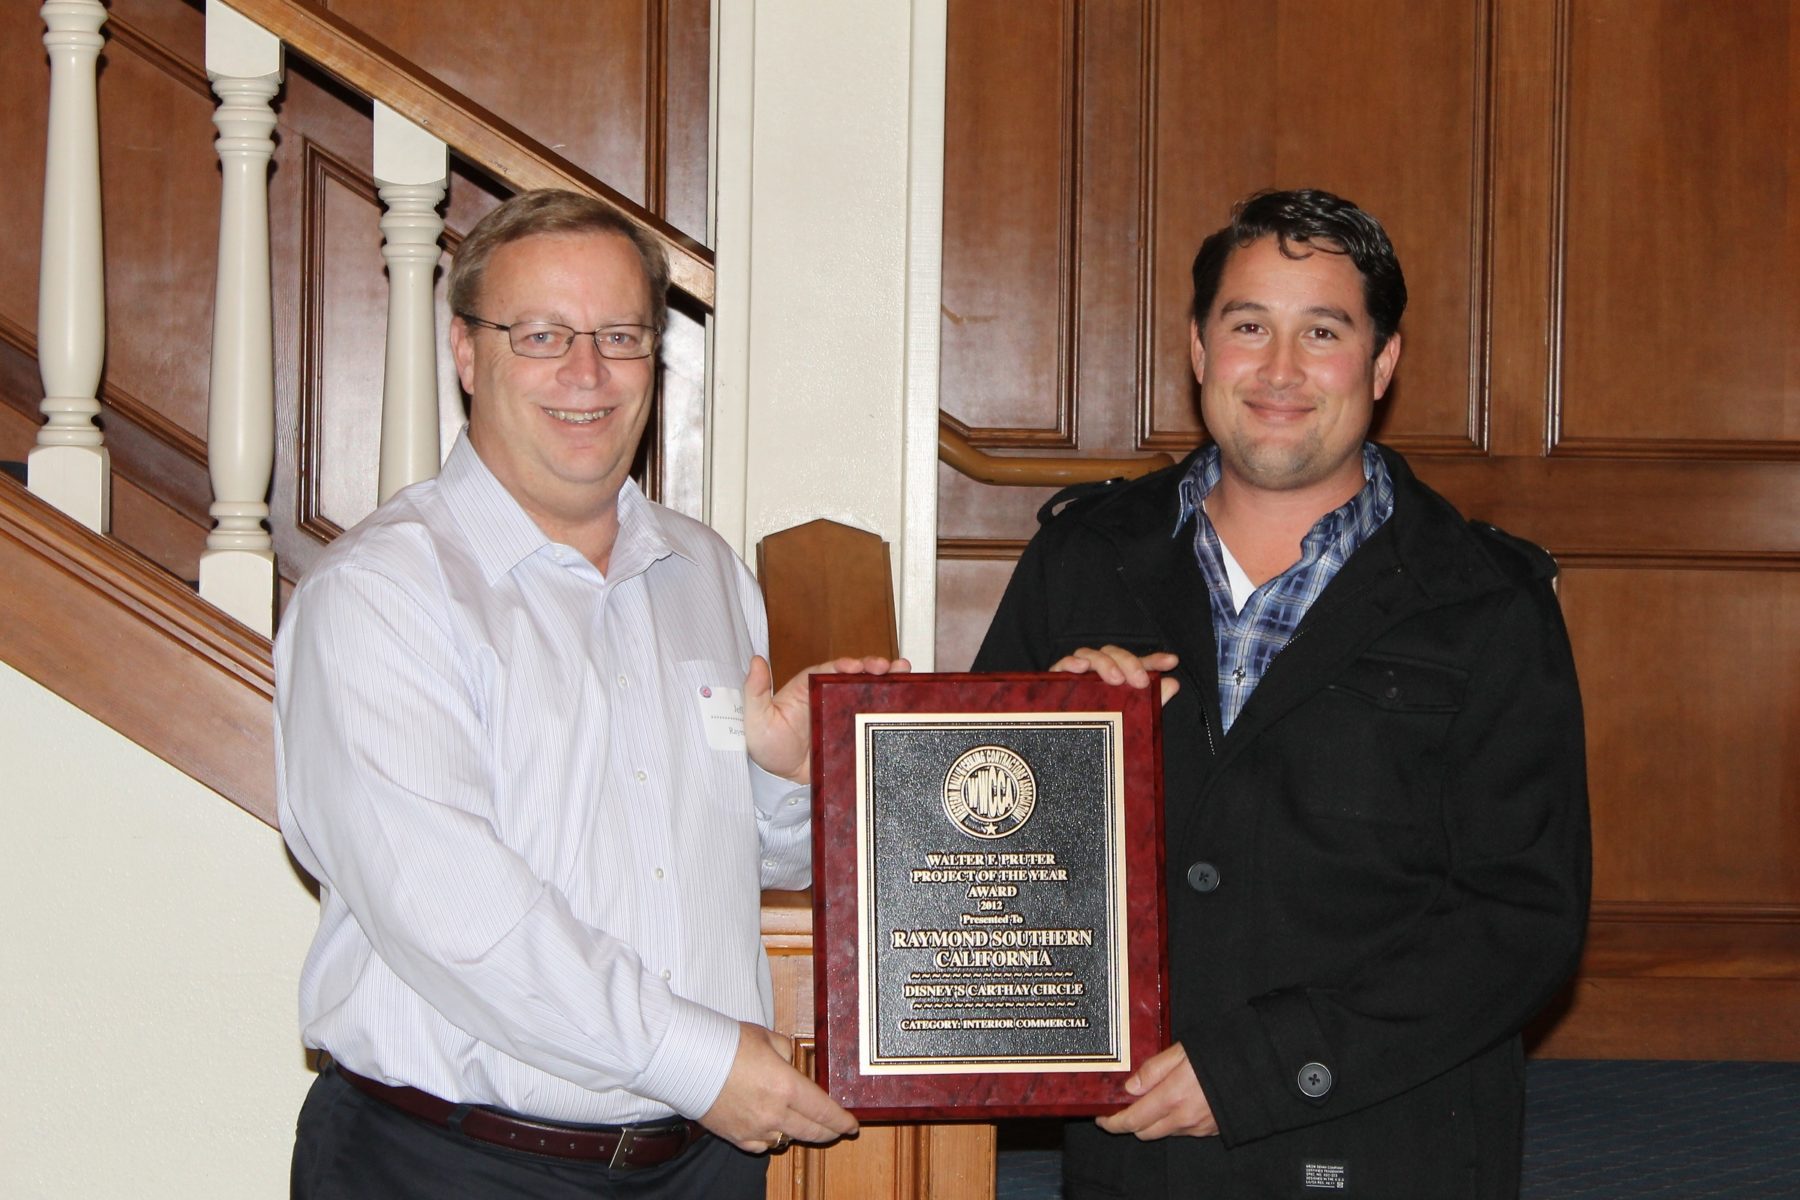 Raymond Awarded 2012 WWCCA Project of the Year Award